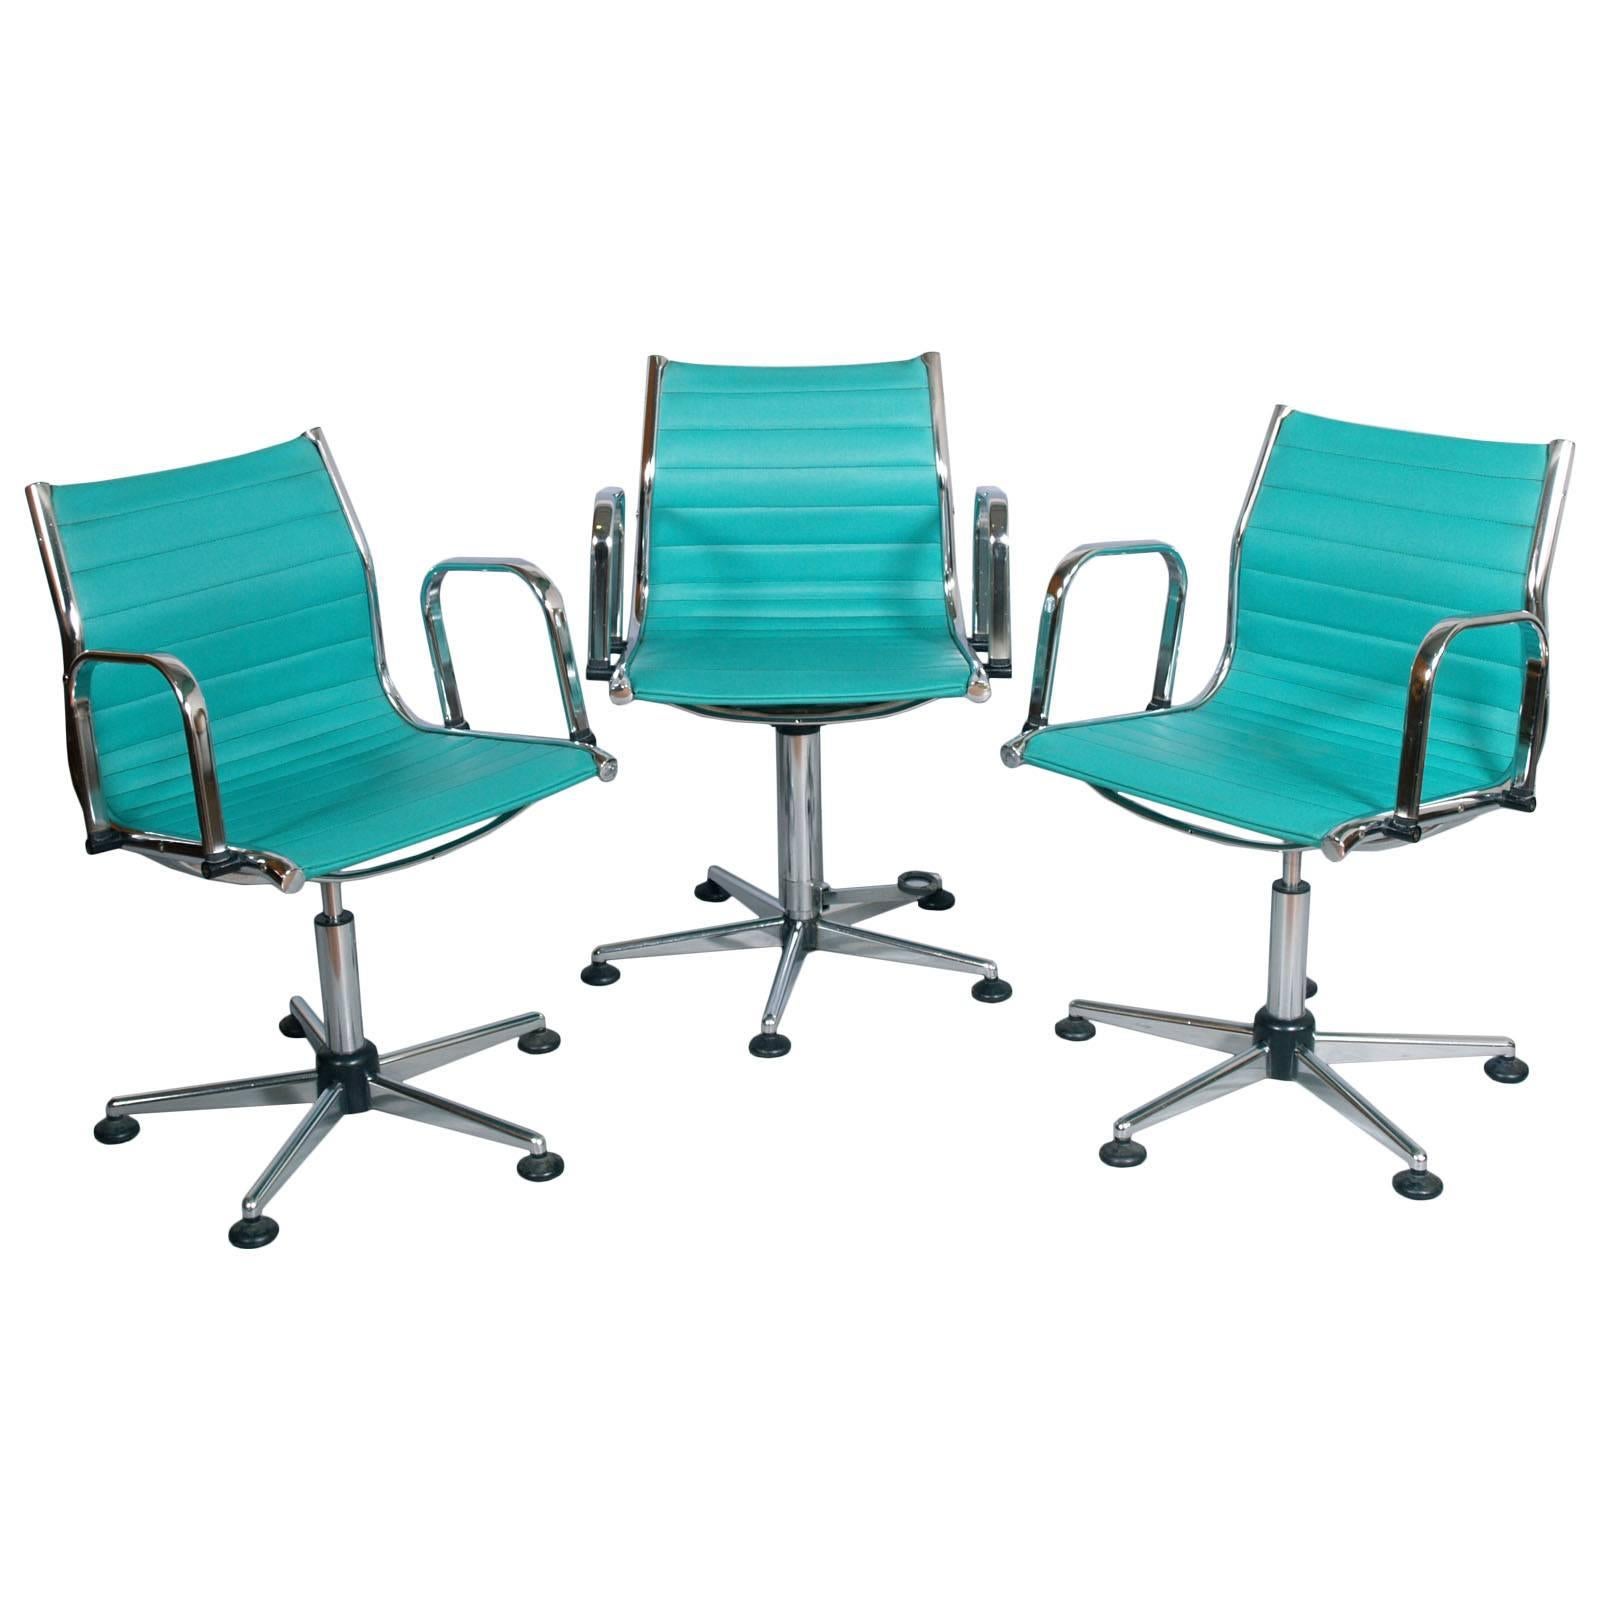 1960s Set Desk Chairs, Chromed Steel, Leatherette Upholstered, Adjustable Height